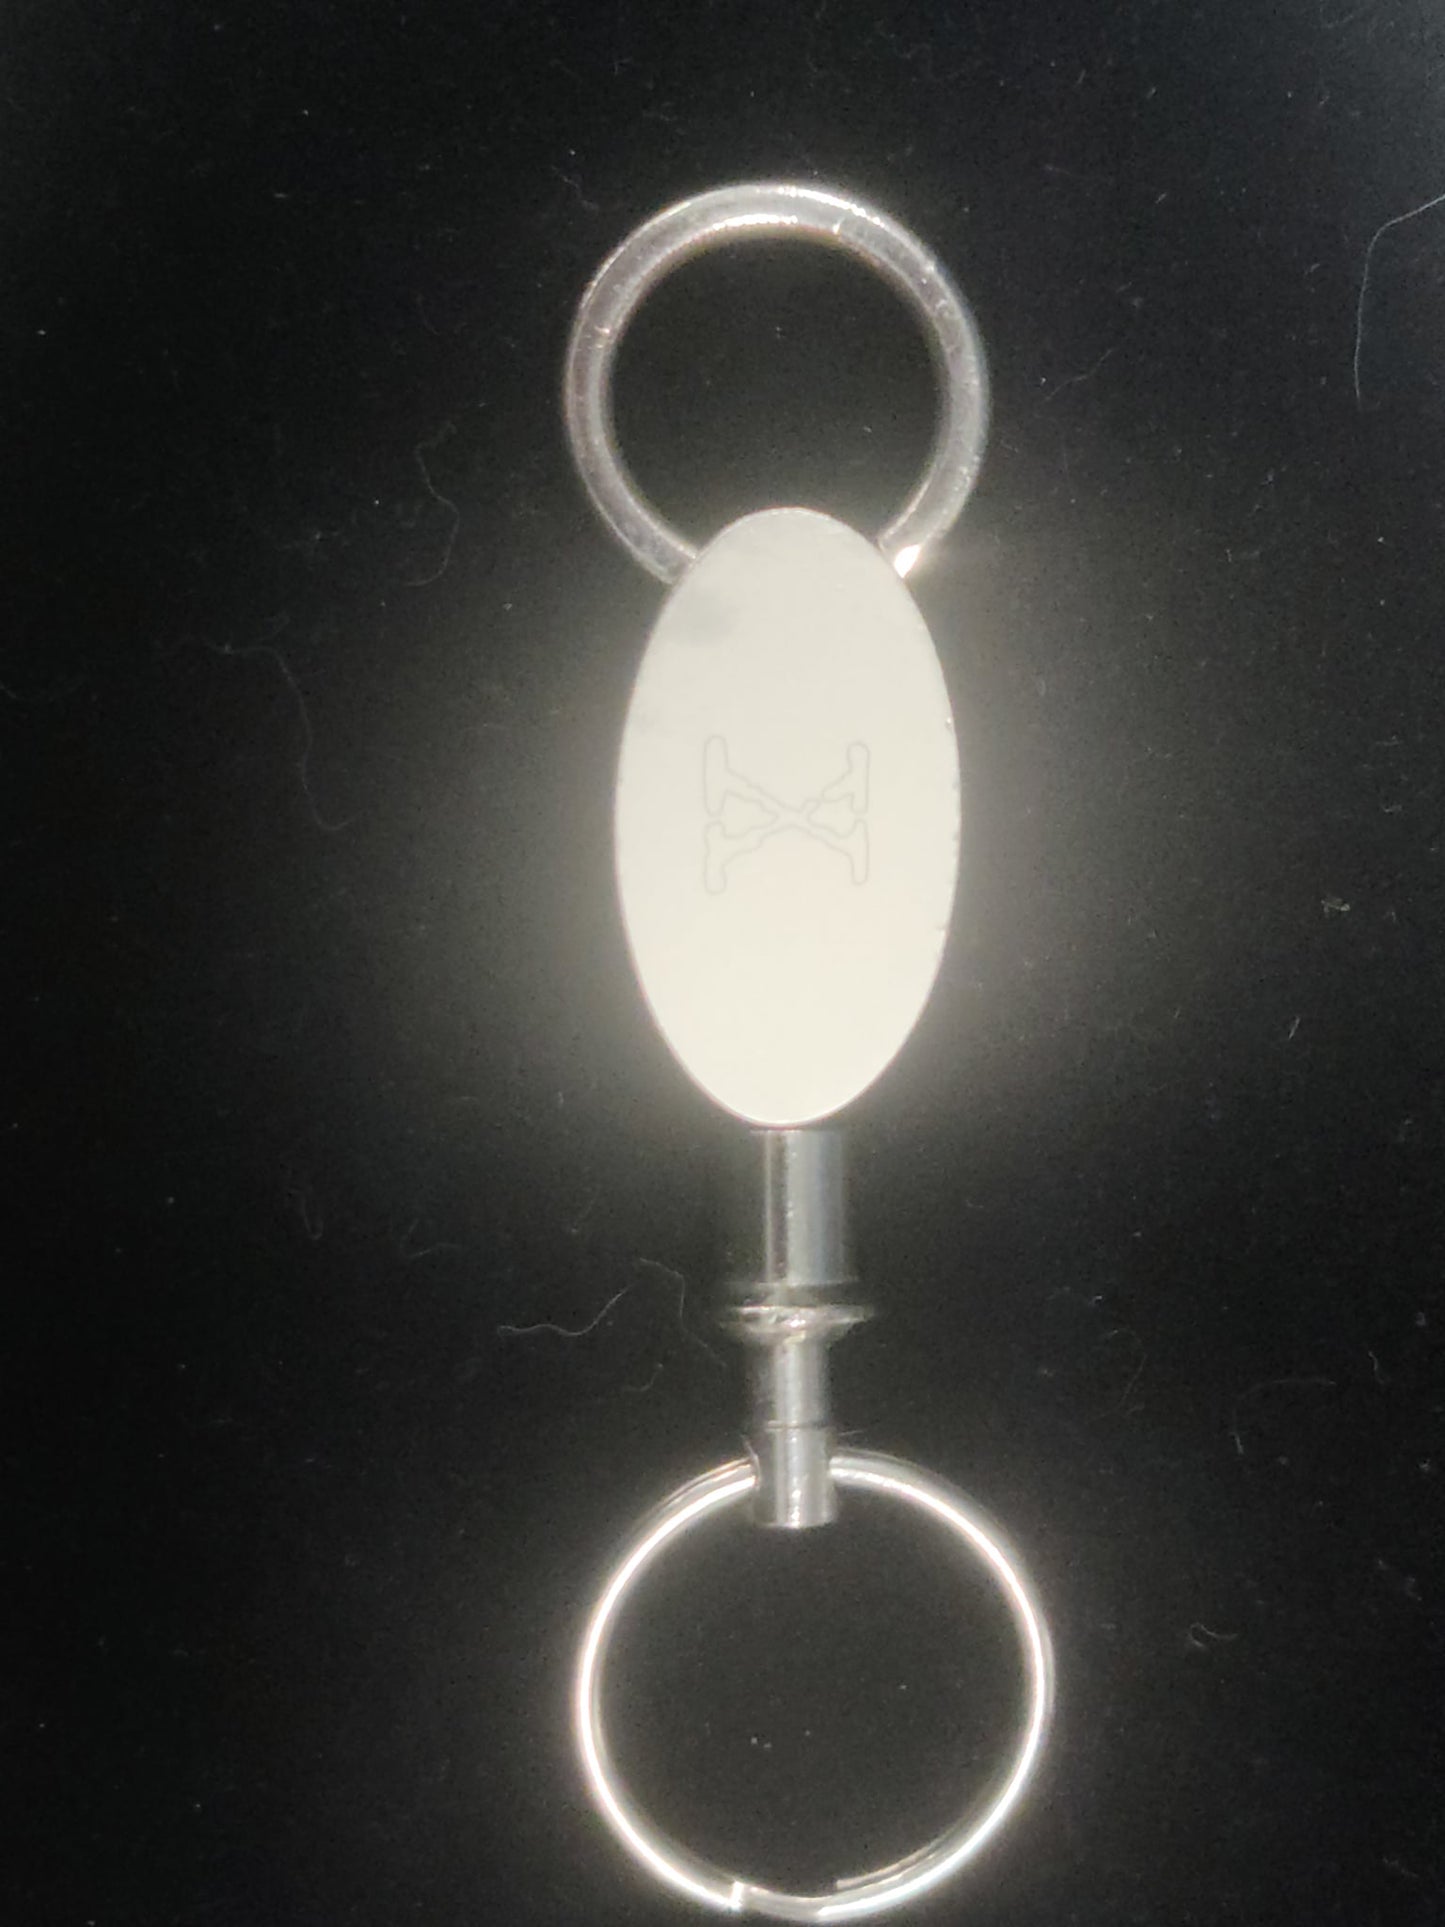 X-Files - Keychain Crew Gift from Gillian Anderson , Robert Patrick and Mitch Pileggi